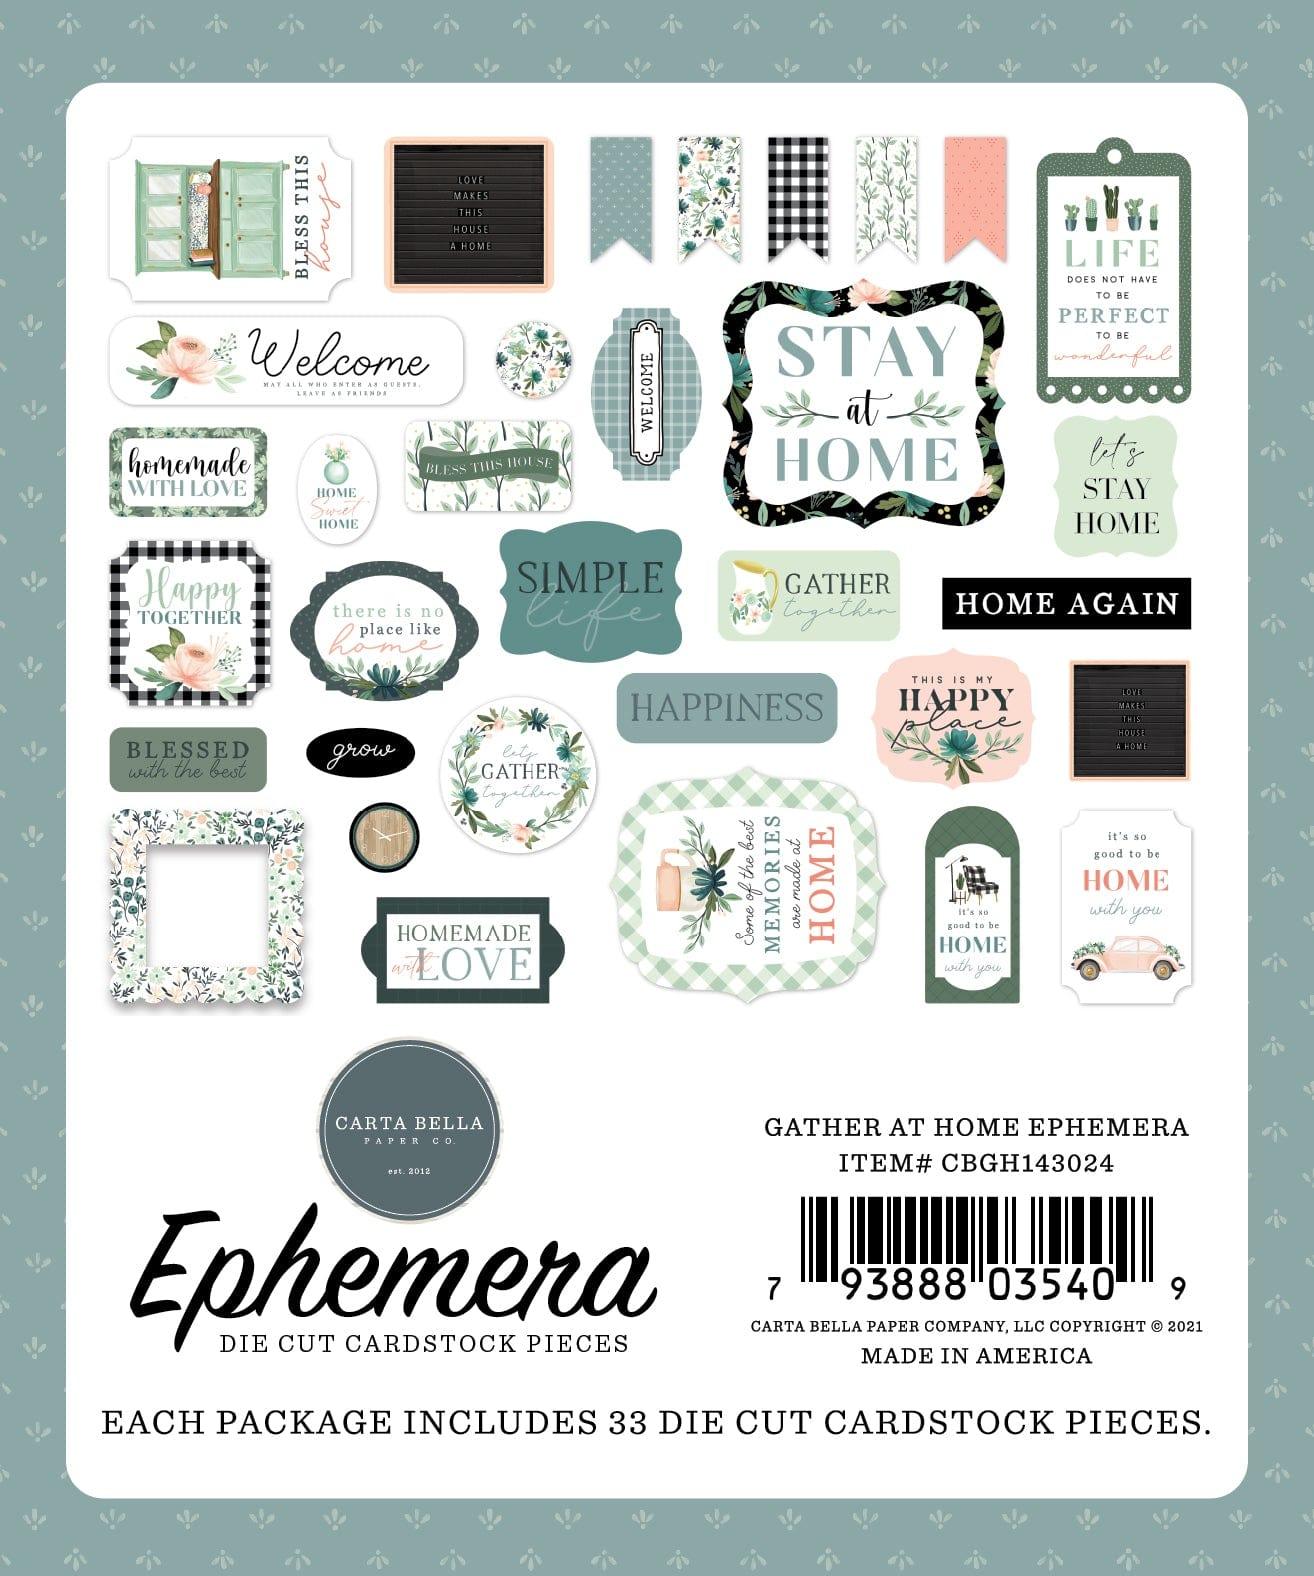 Gather At Home Collection 5 x 5 Scrapbook Ephemera Die Cuts by Carta Bella - Scrapbook Supply Companies